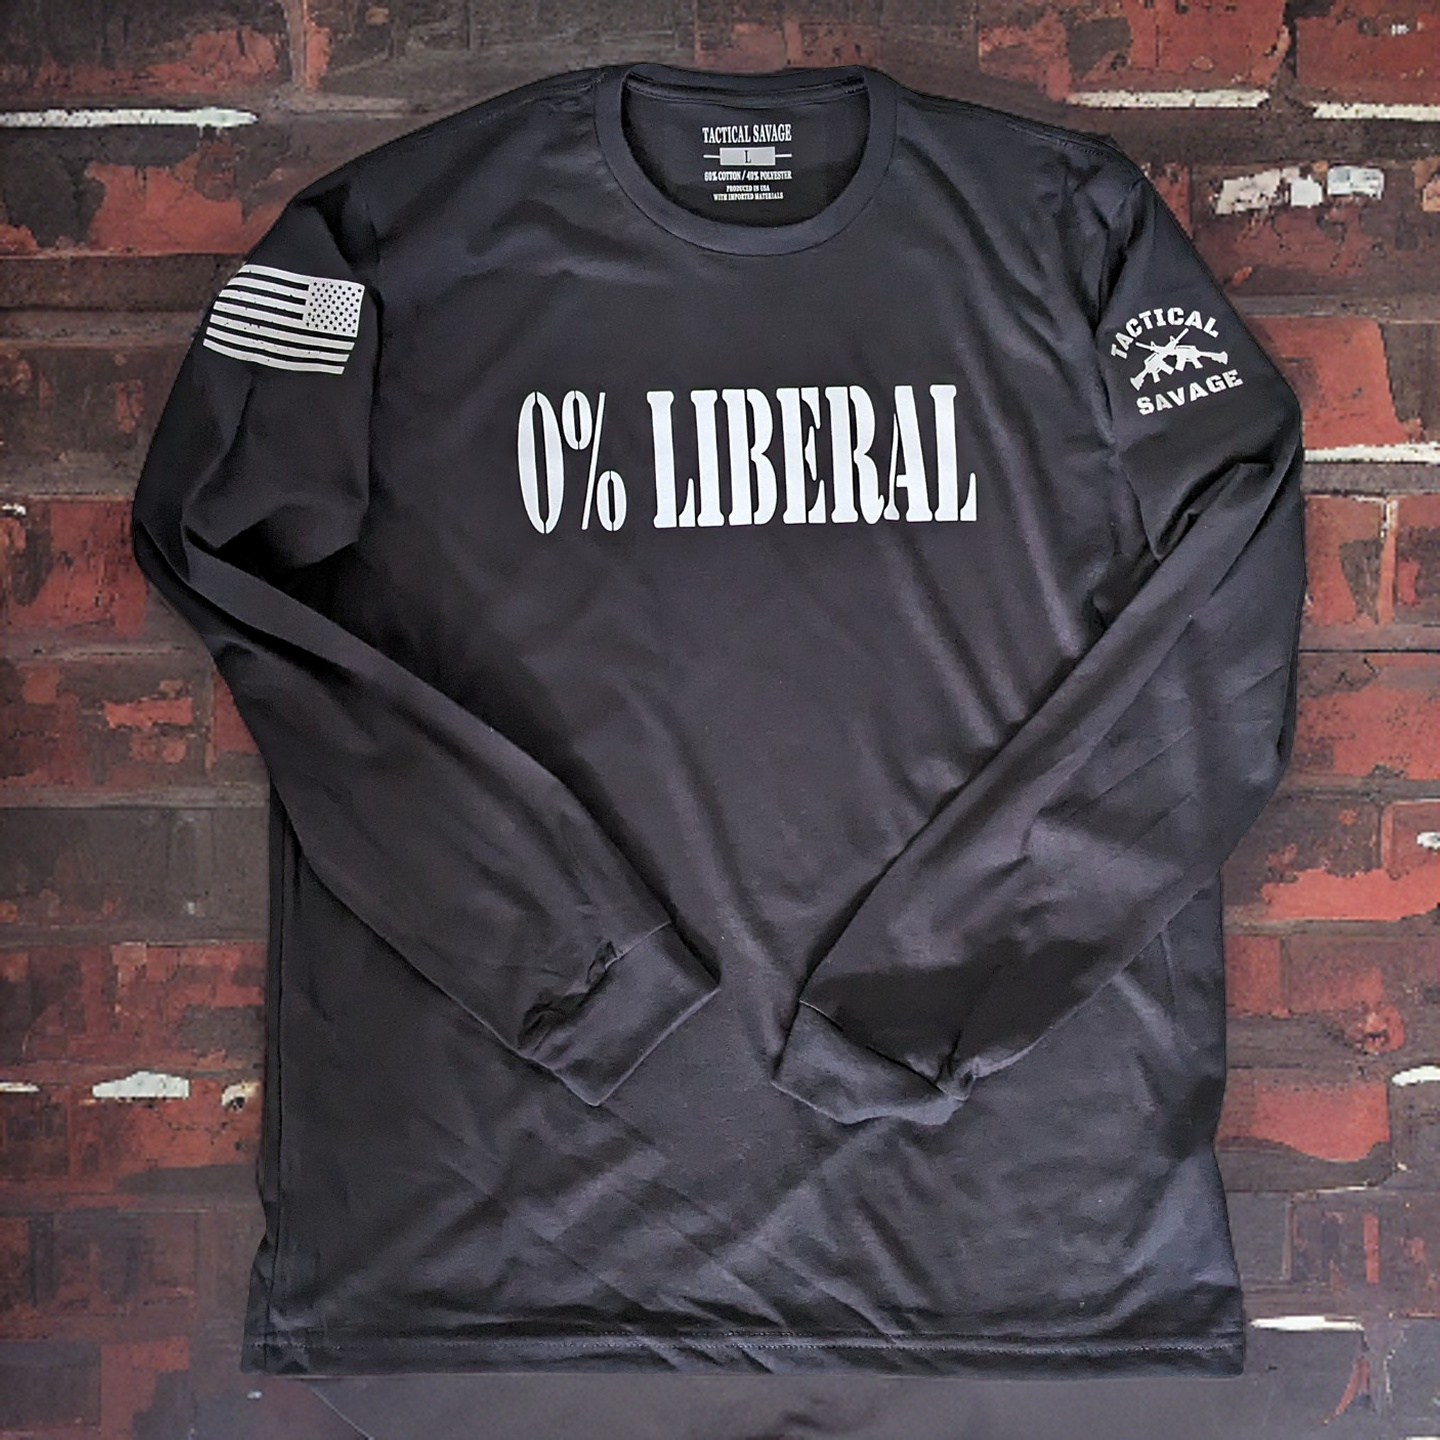 0% Liberal long sleeve